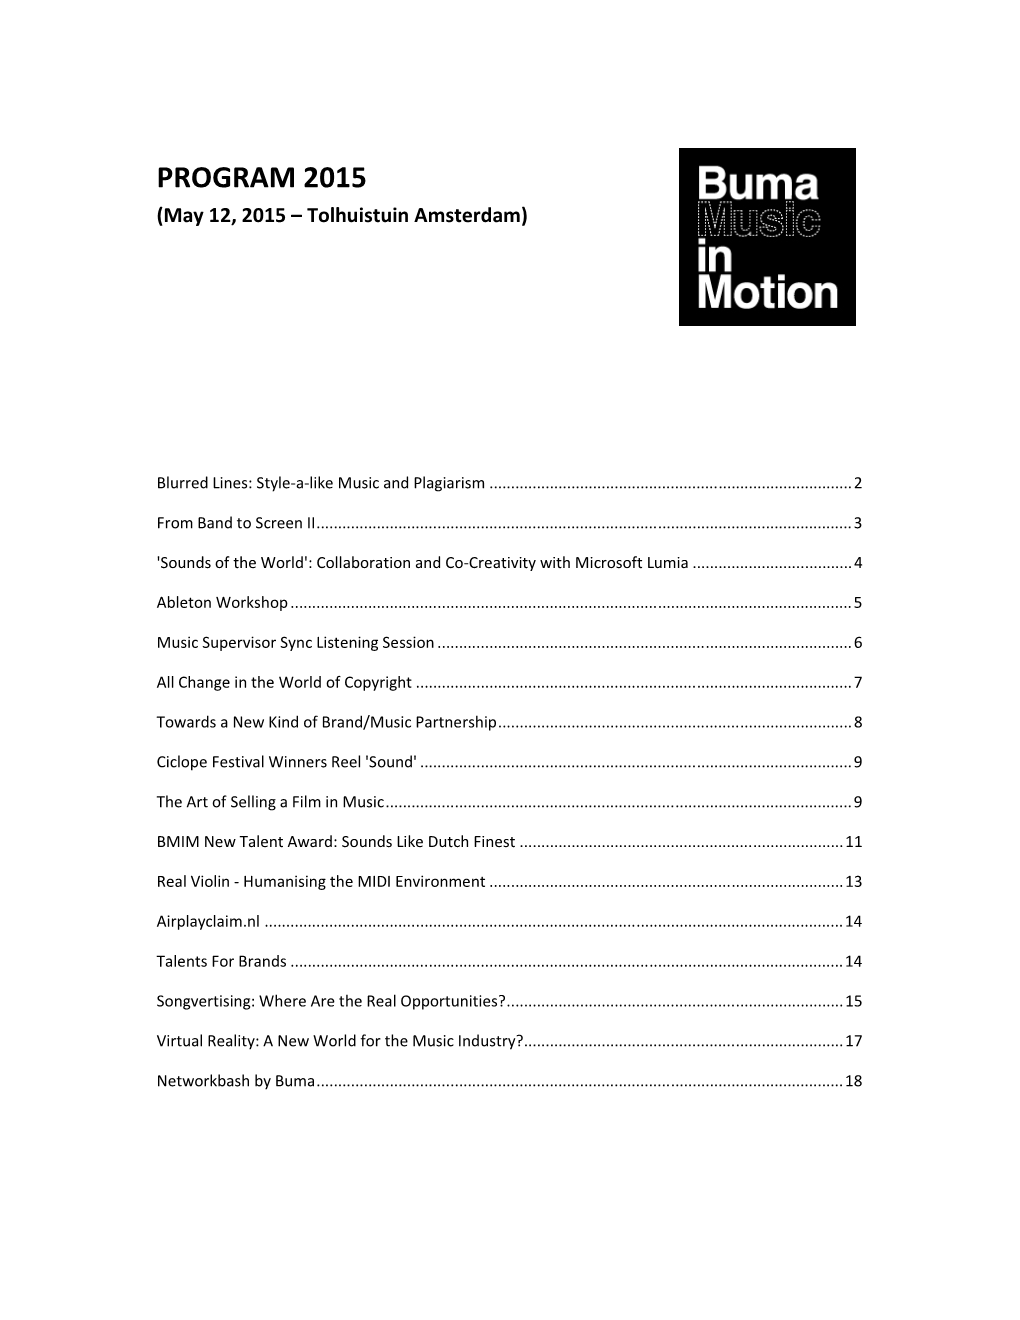 Program BMIM 2015